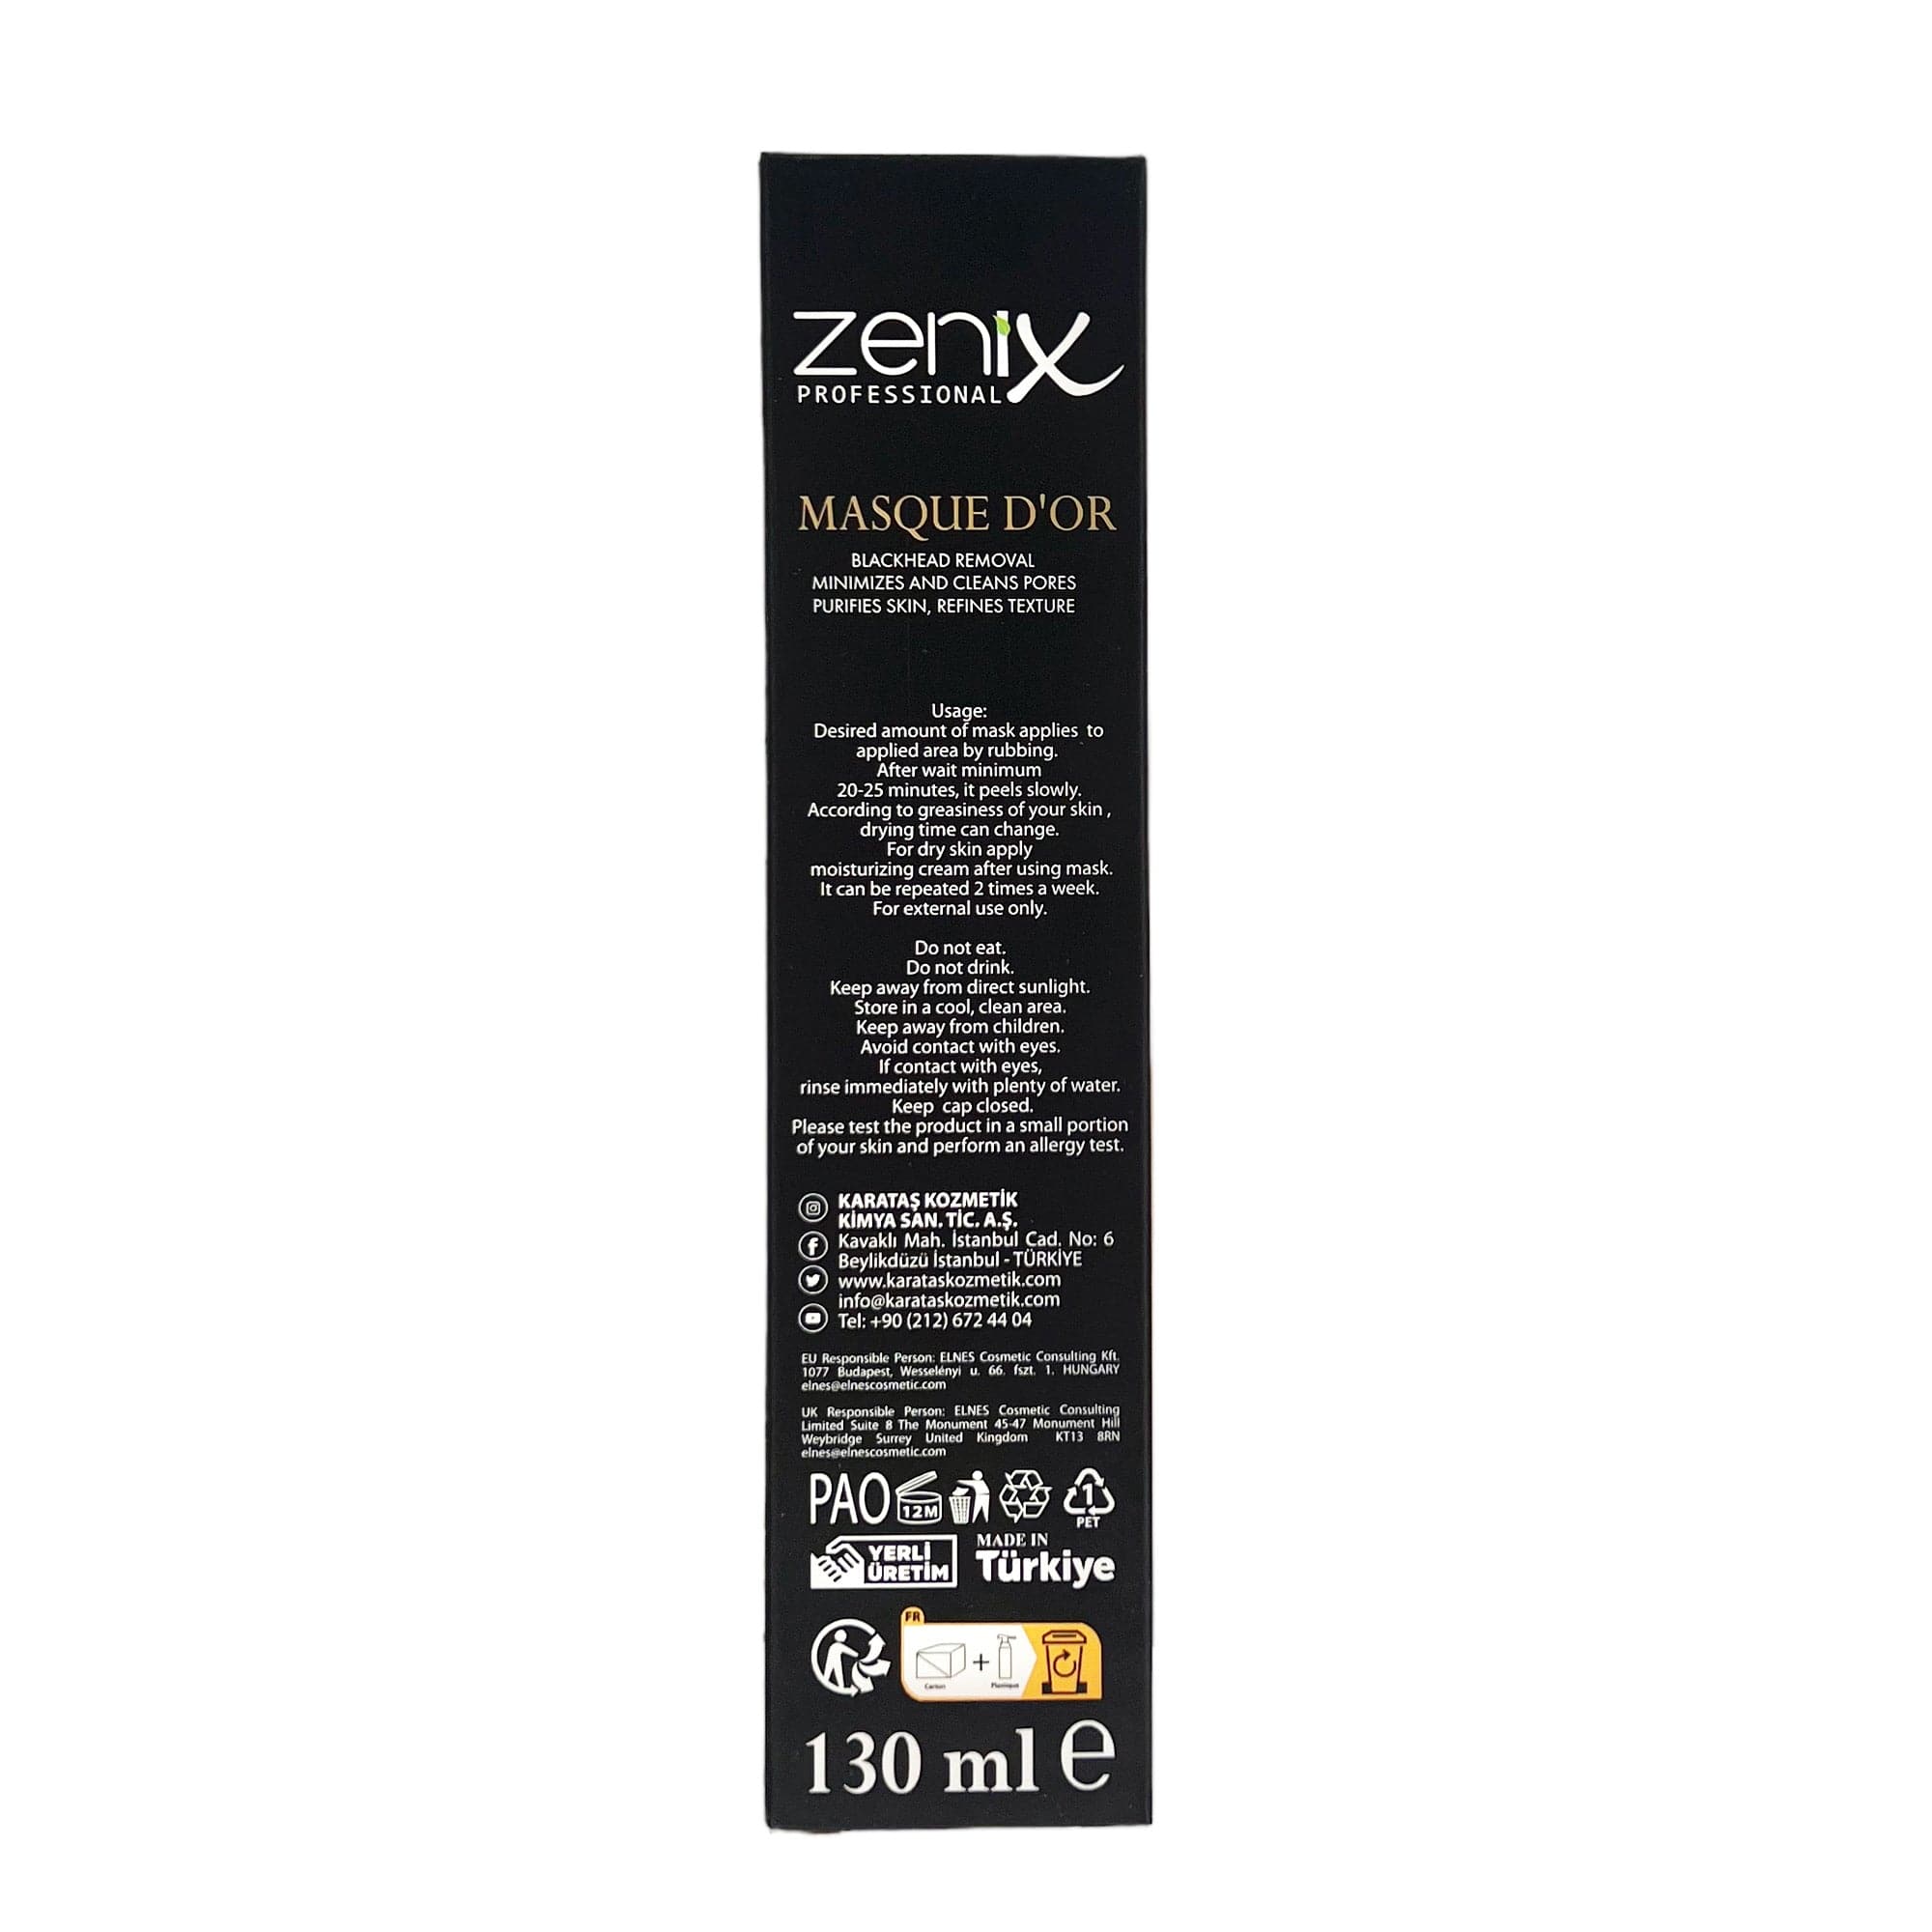 Zenix - Gold Mask Peel Off Face Mask 130ml